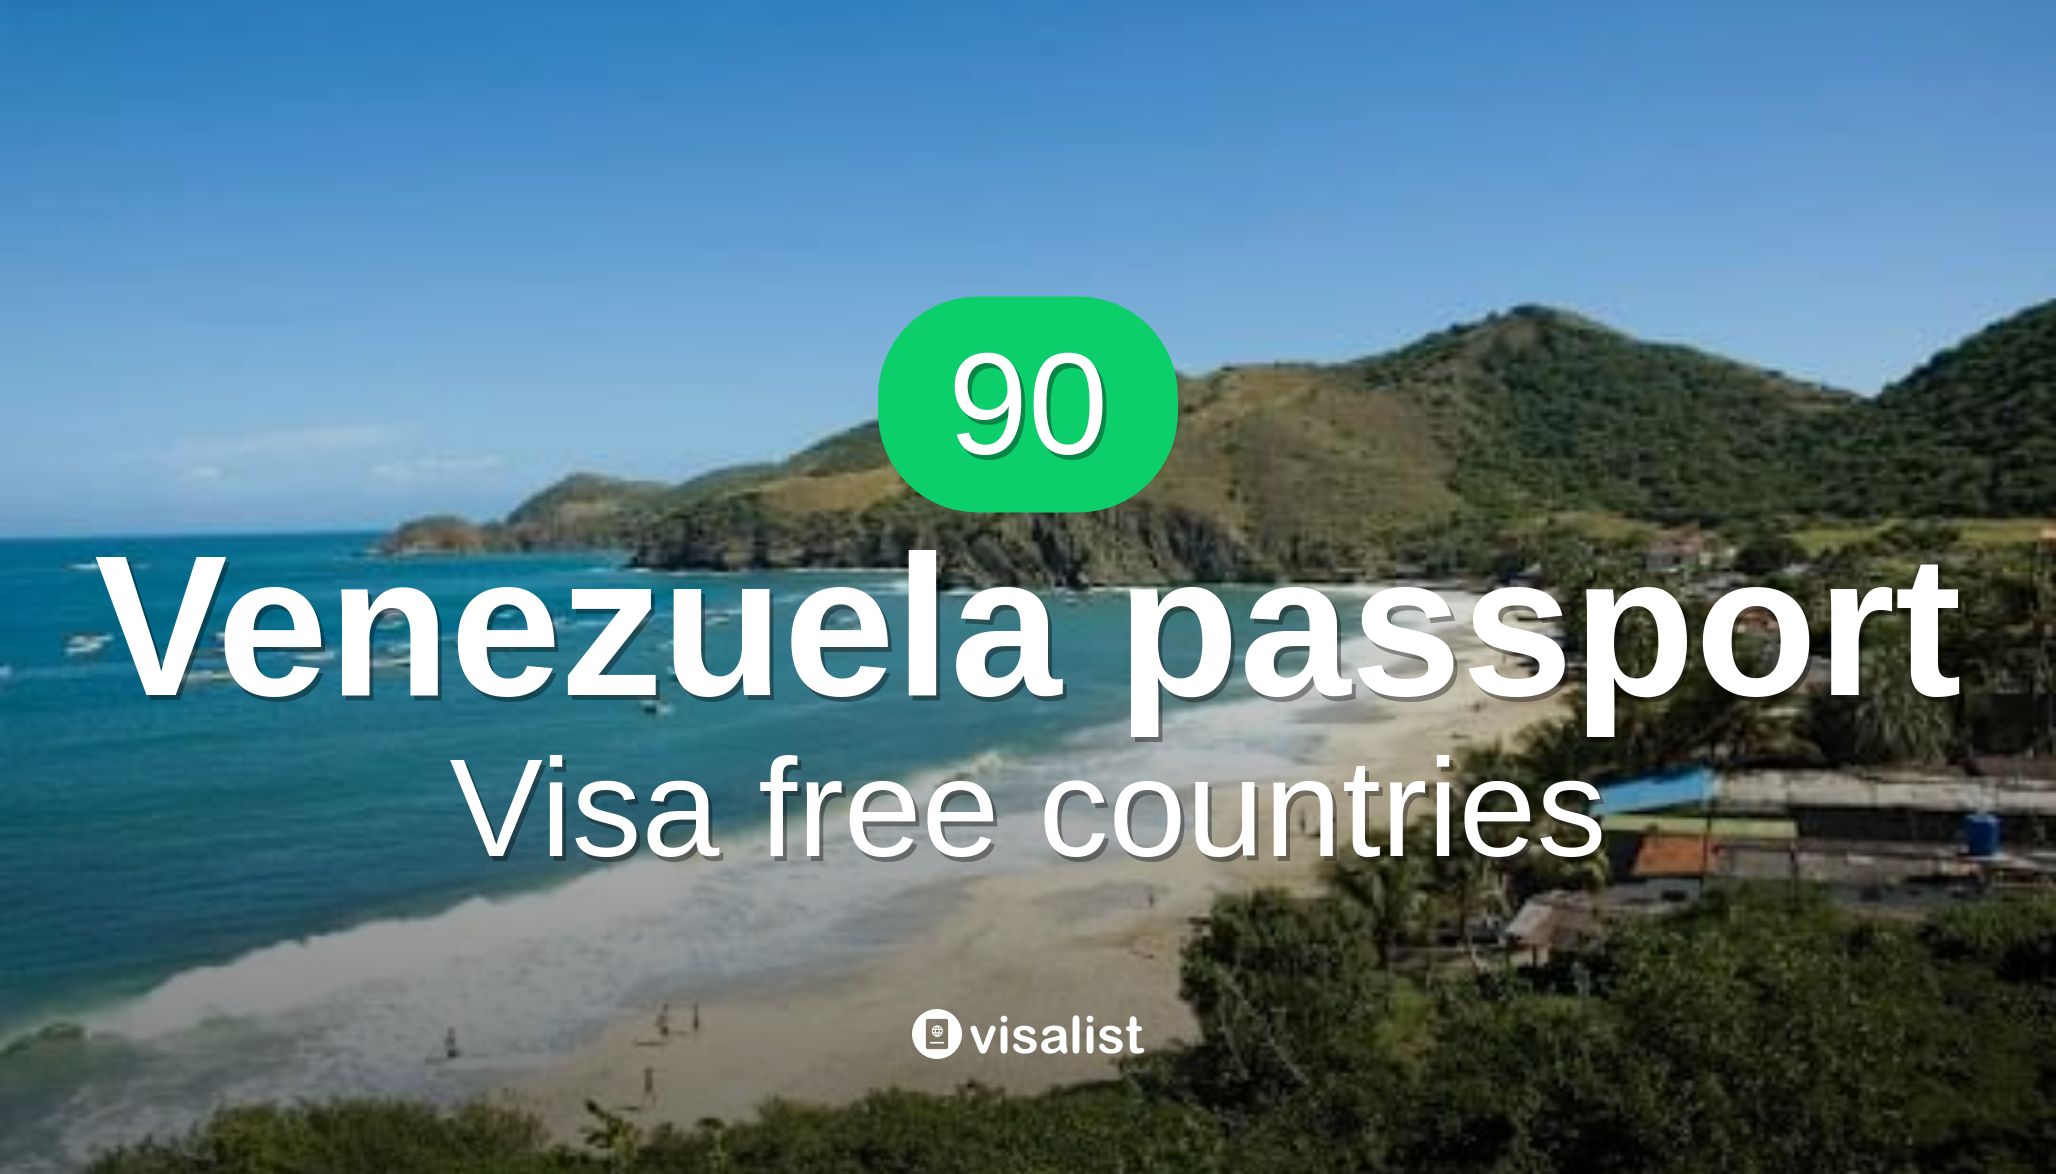 uk tourist visa for venezuelan citizens